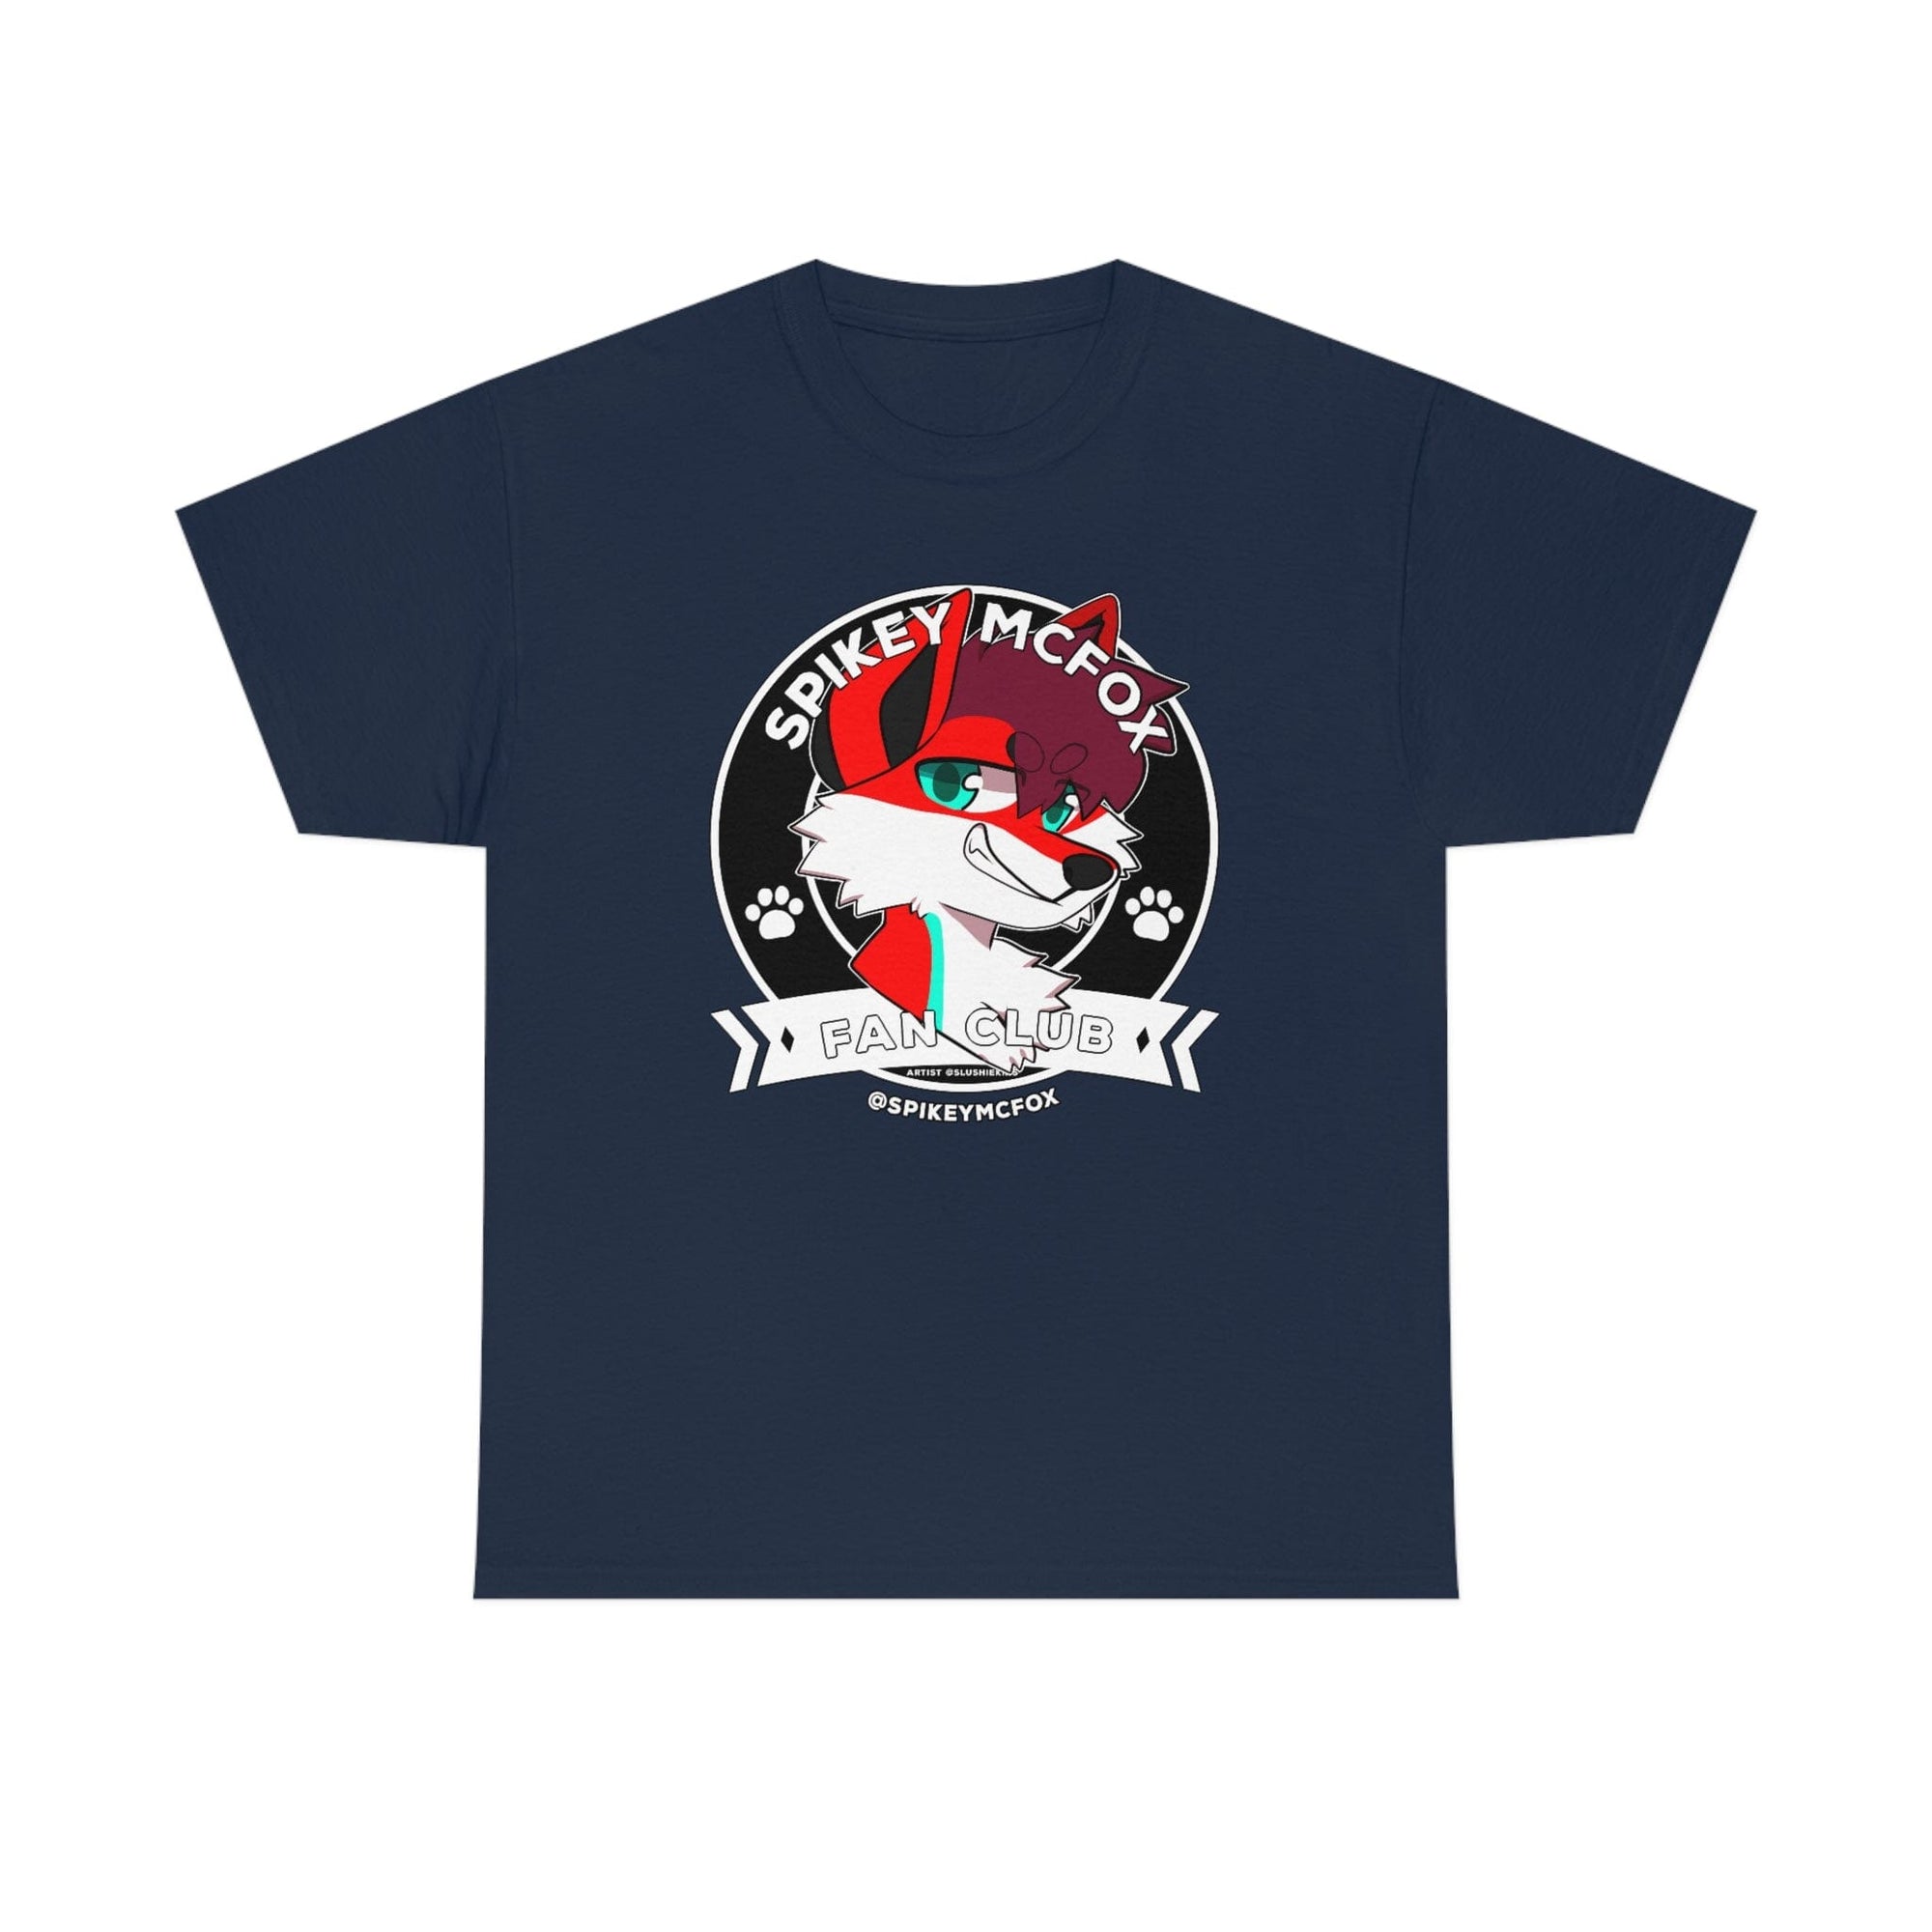 McFox Fan Club - T-Shirt T-Shirt AFLT-Spikey McFox Navy Blue S 